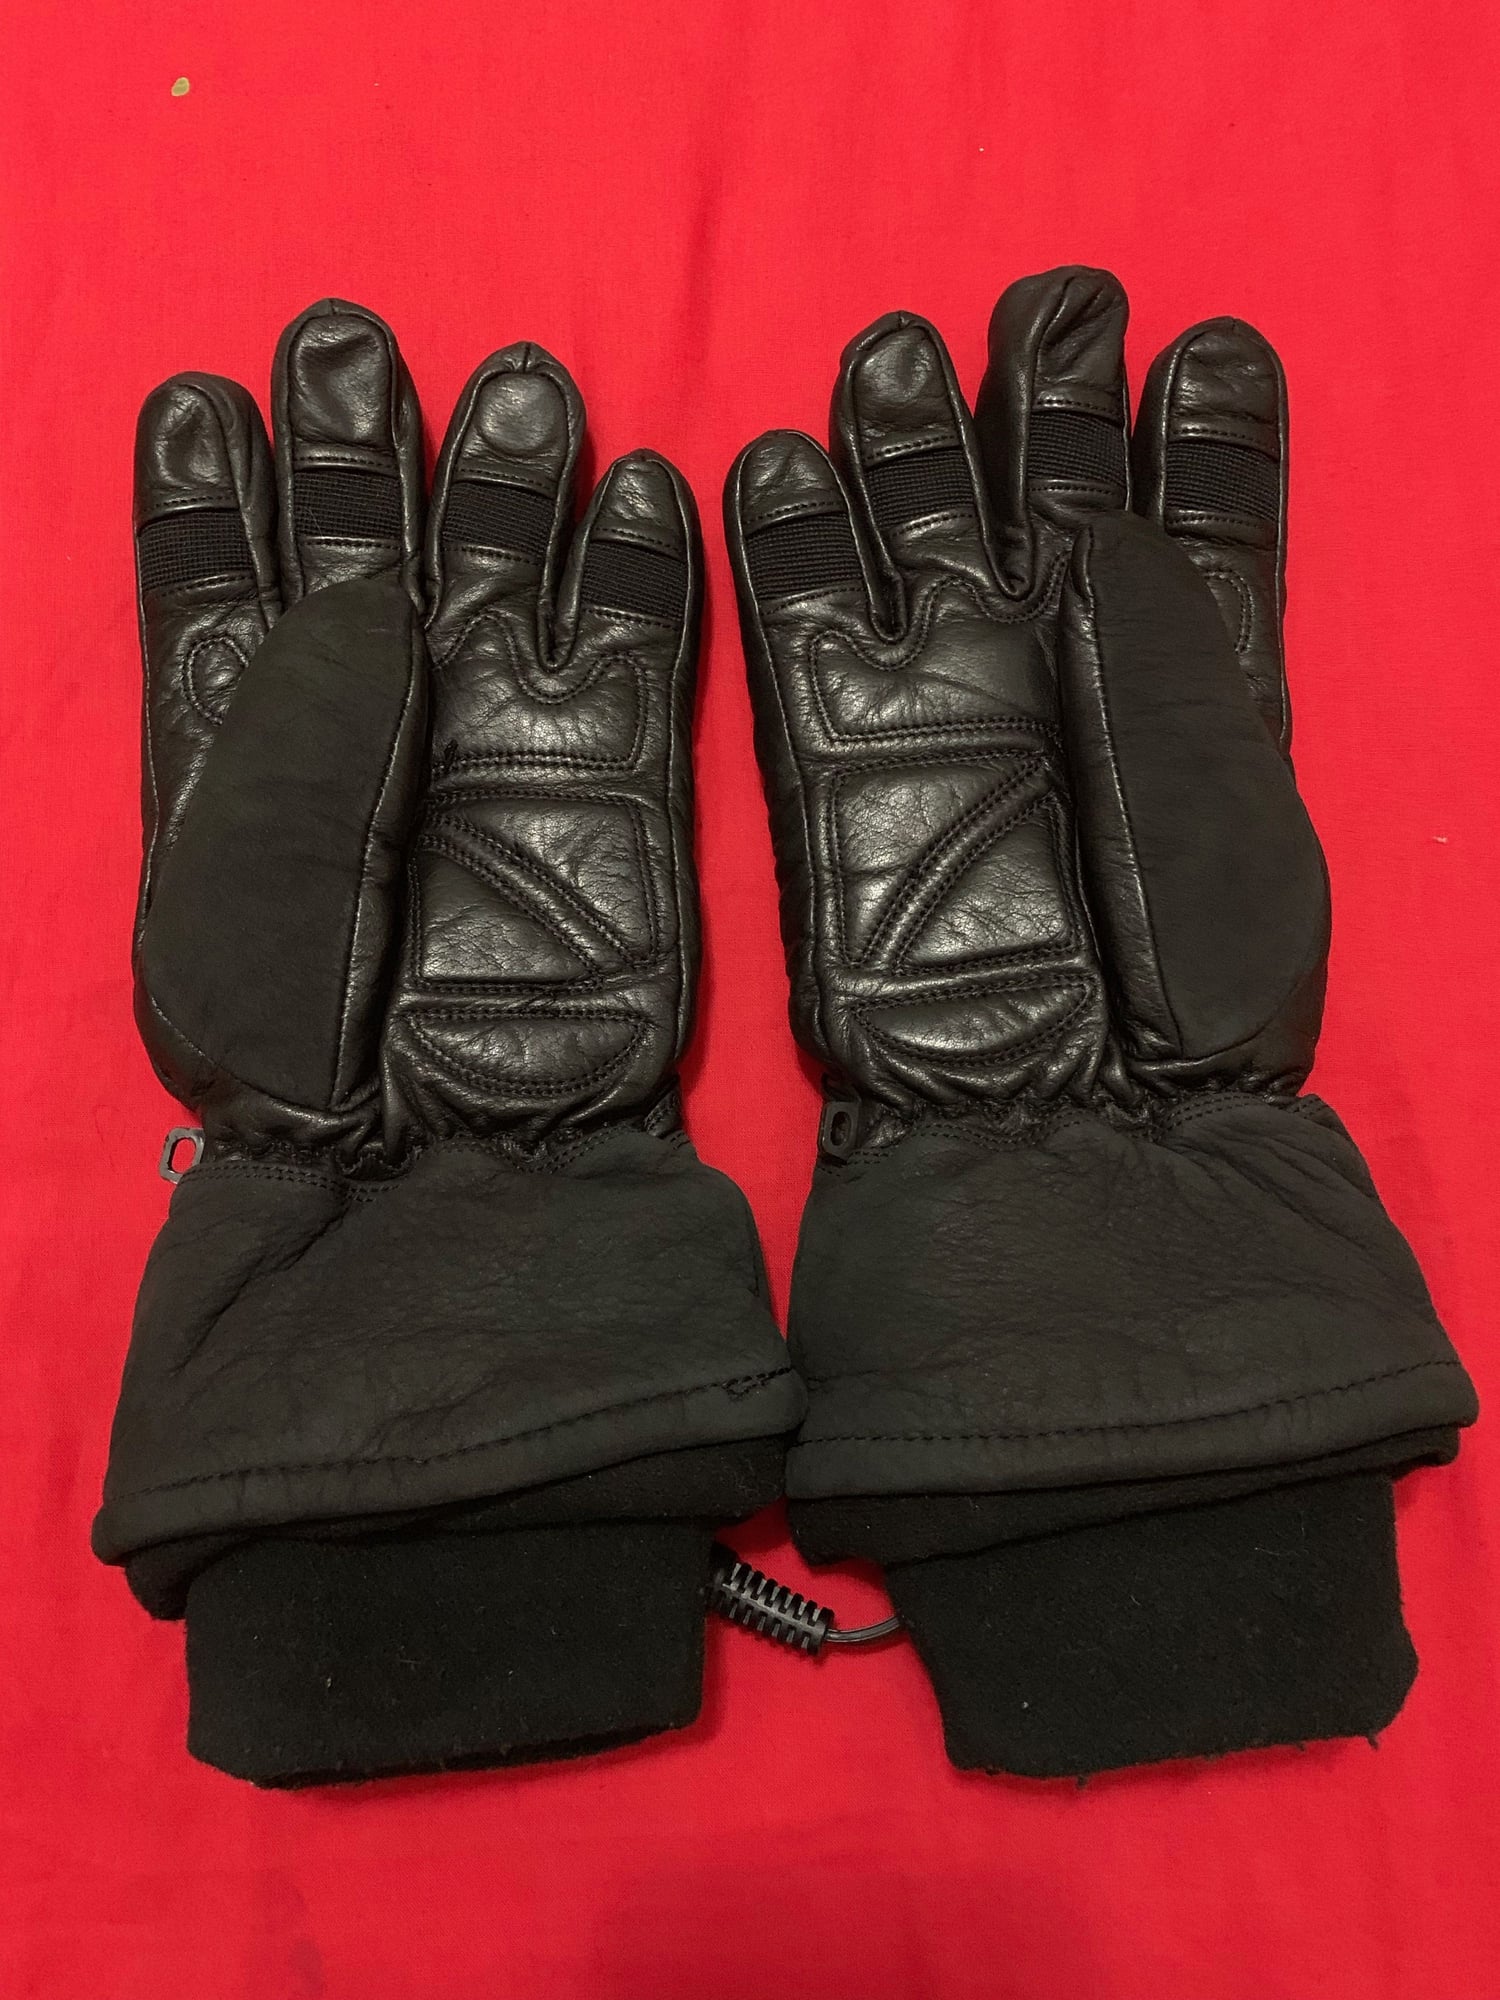 Gently Used Harley Heated gloves Size Large (Mens) - Harley Davidson Forums